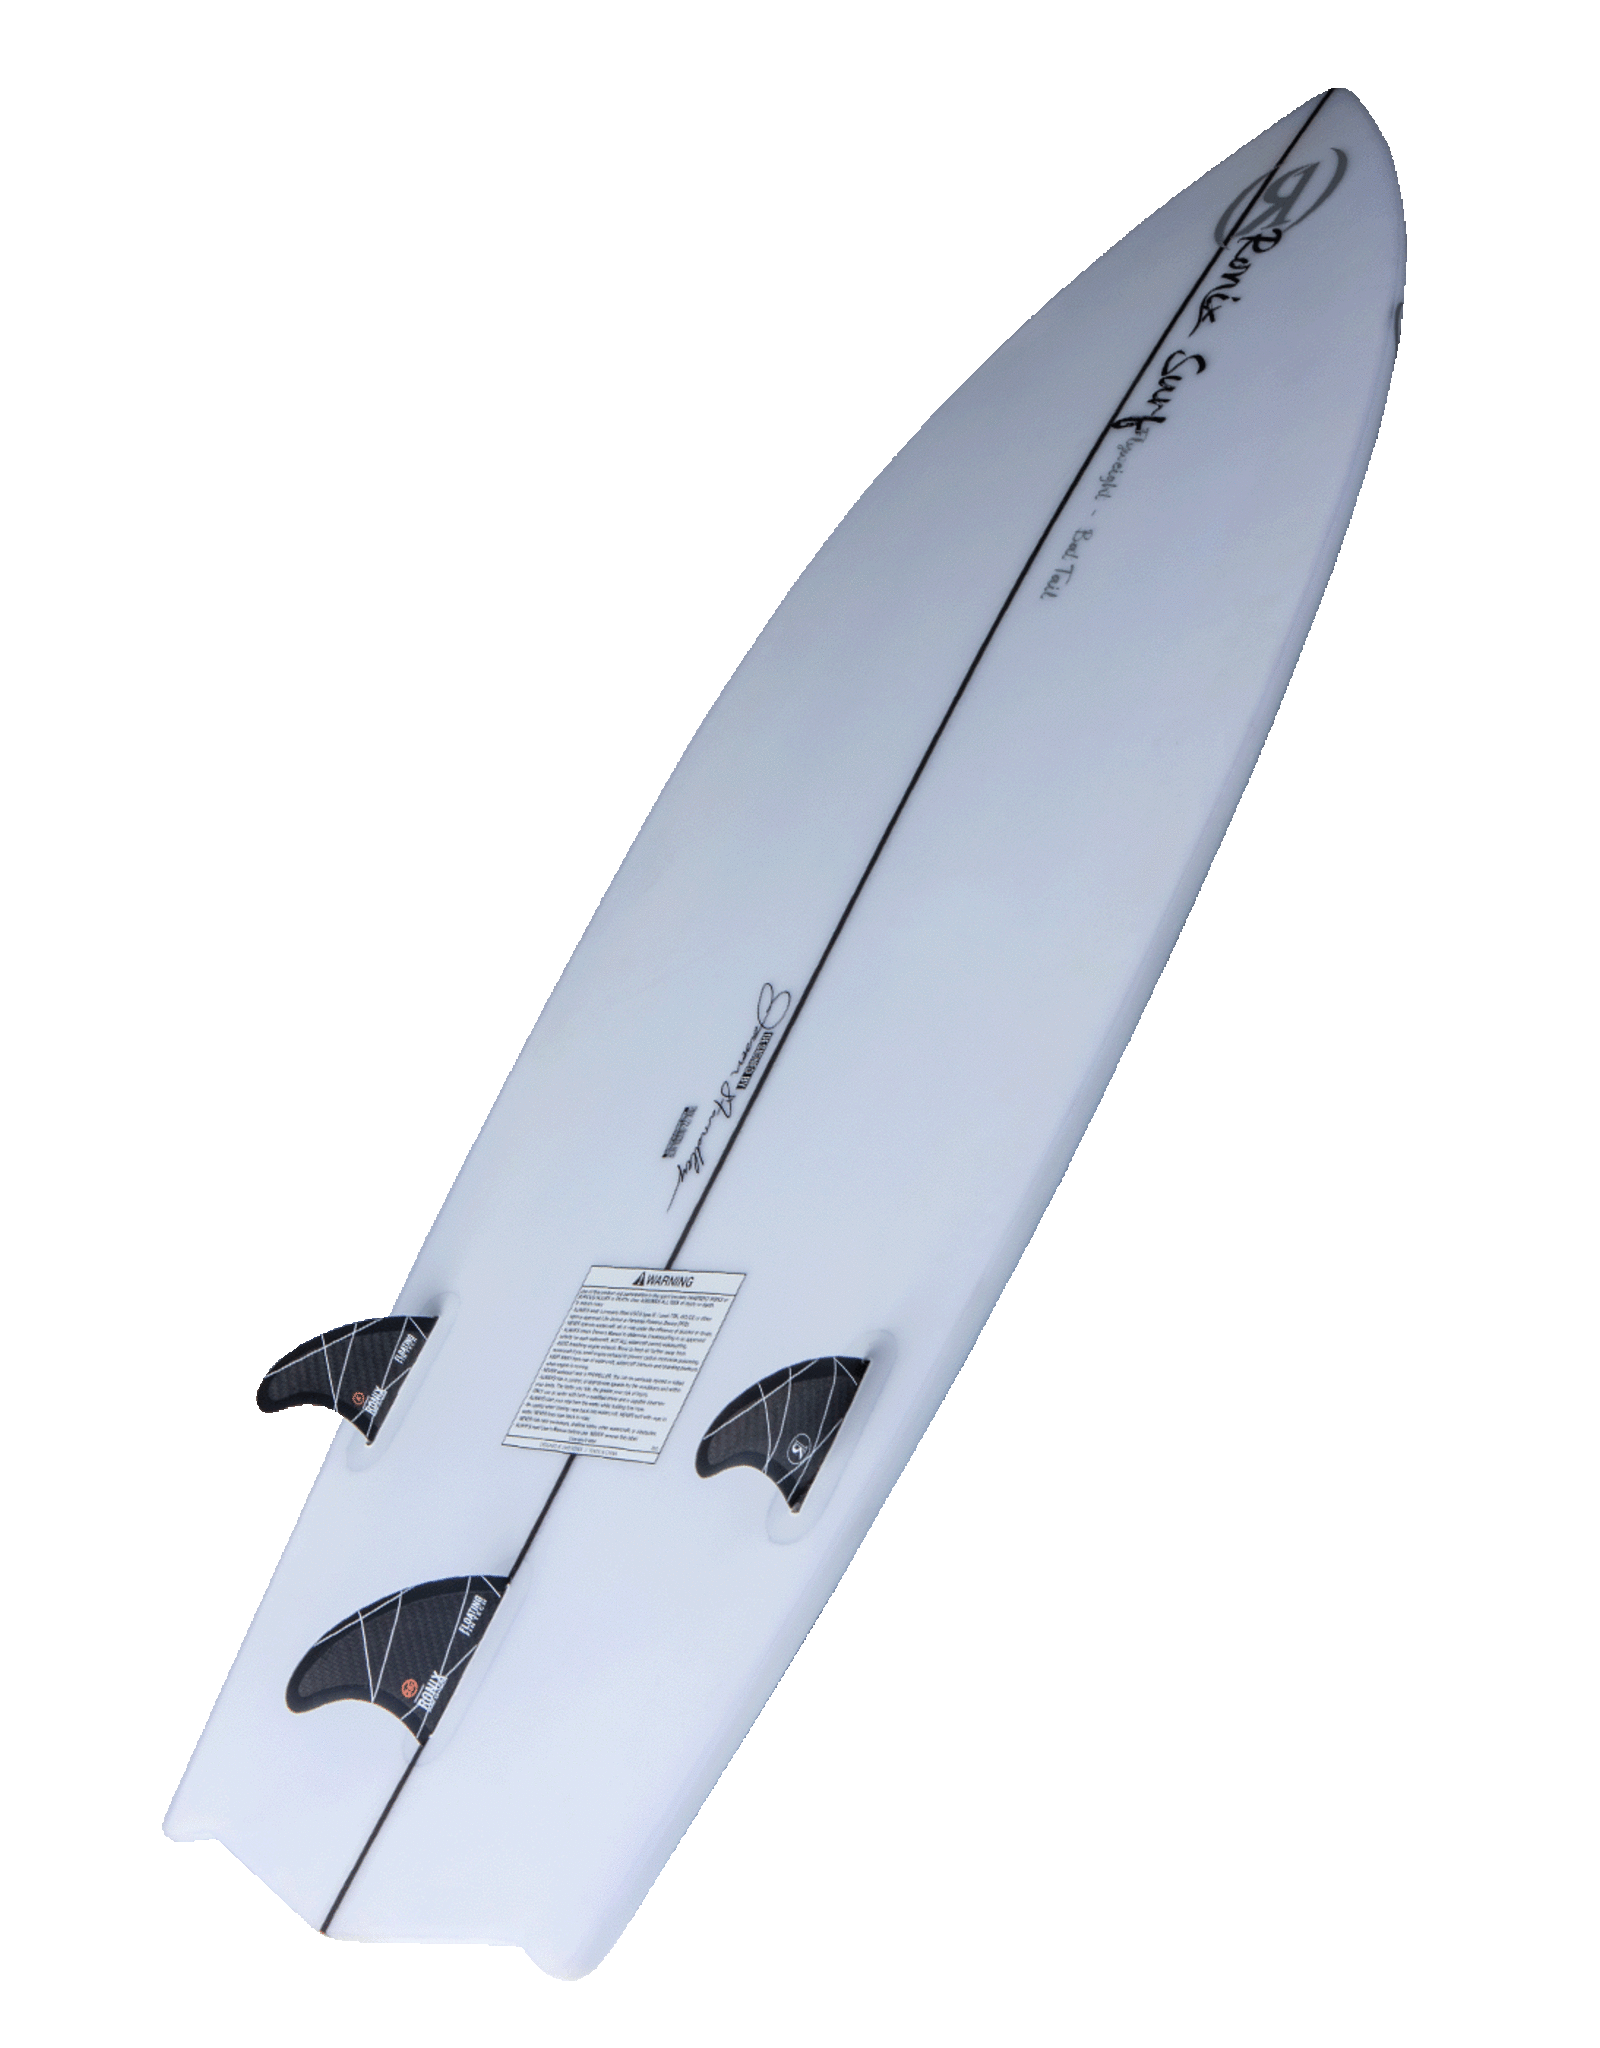 Ronix 2021 Flyweight - Bat Tail - Glacier White / Red - 4'6 Wide